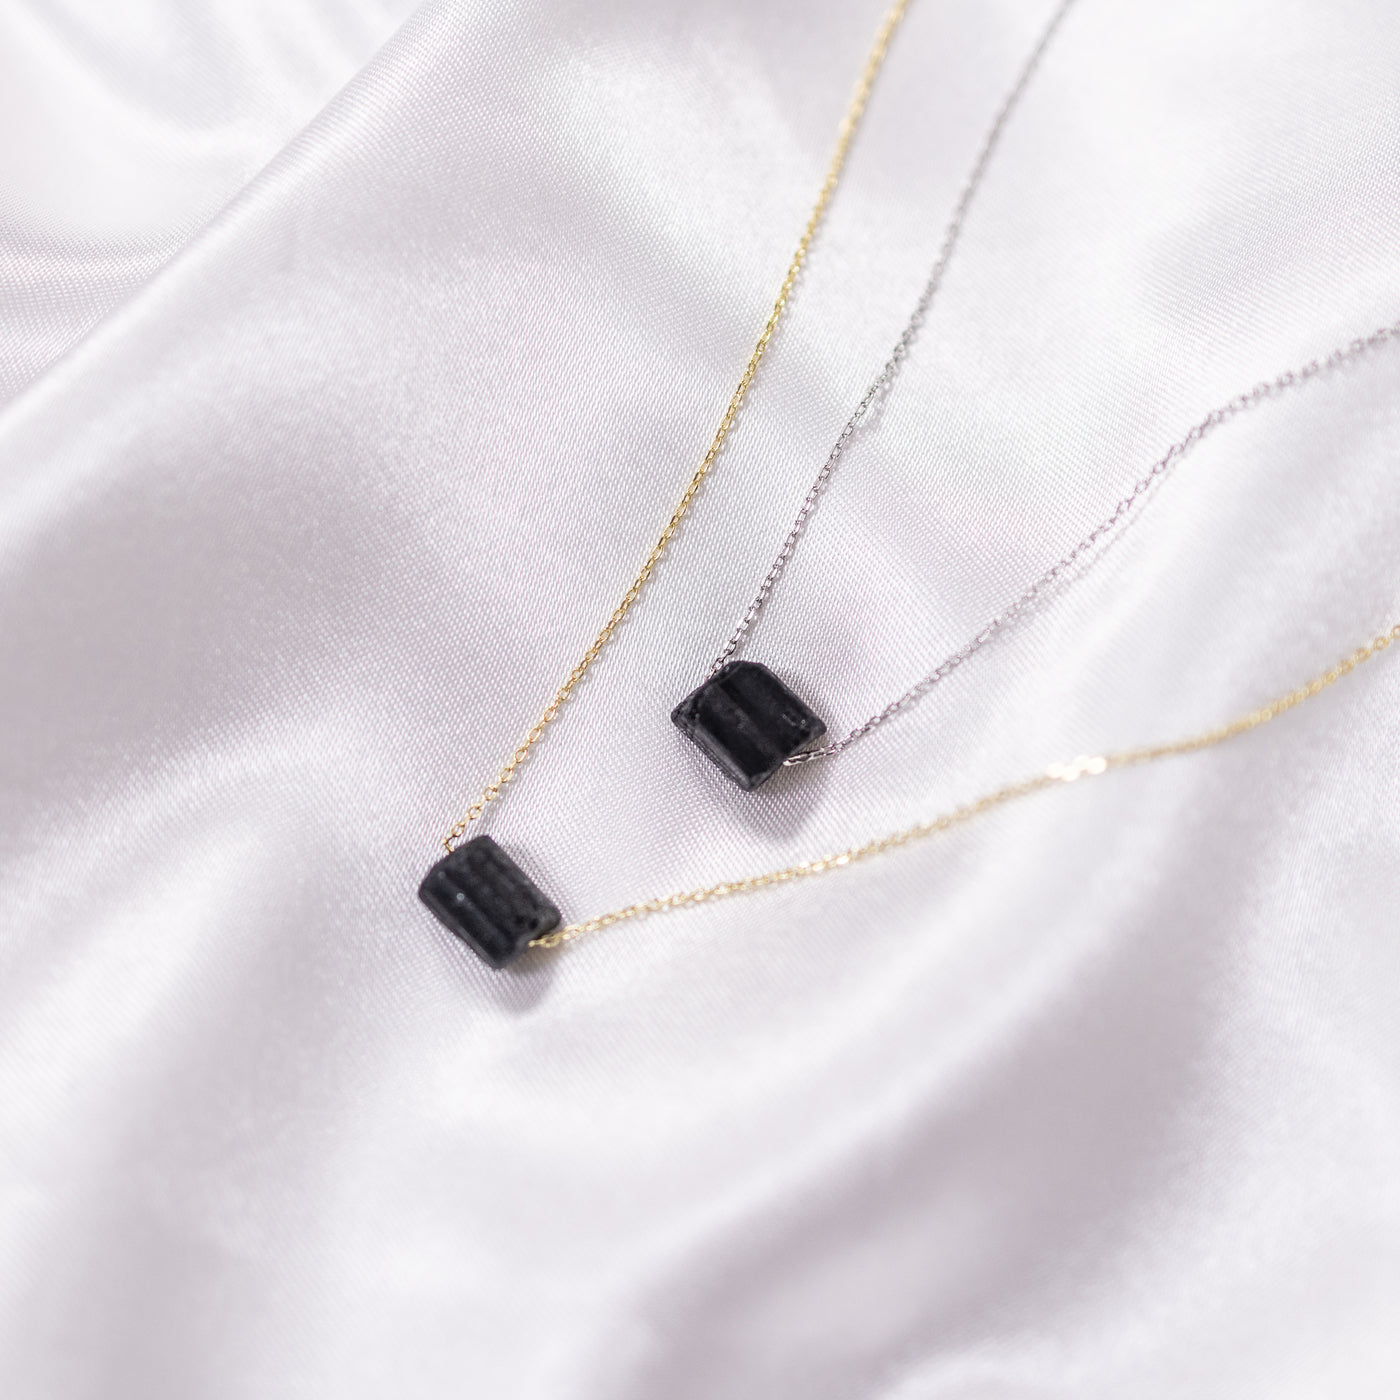 Shop Raw Black Tourmaline Crystal Necklace 14K Gold, Sterling Silver, Minimalist Dainty Jewelry Necklace | Soul Charms